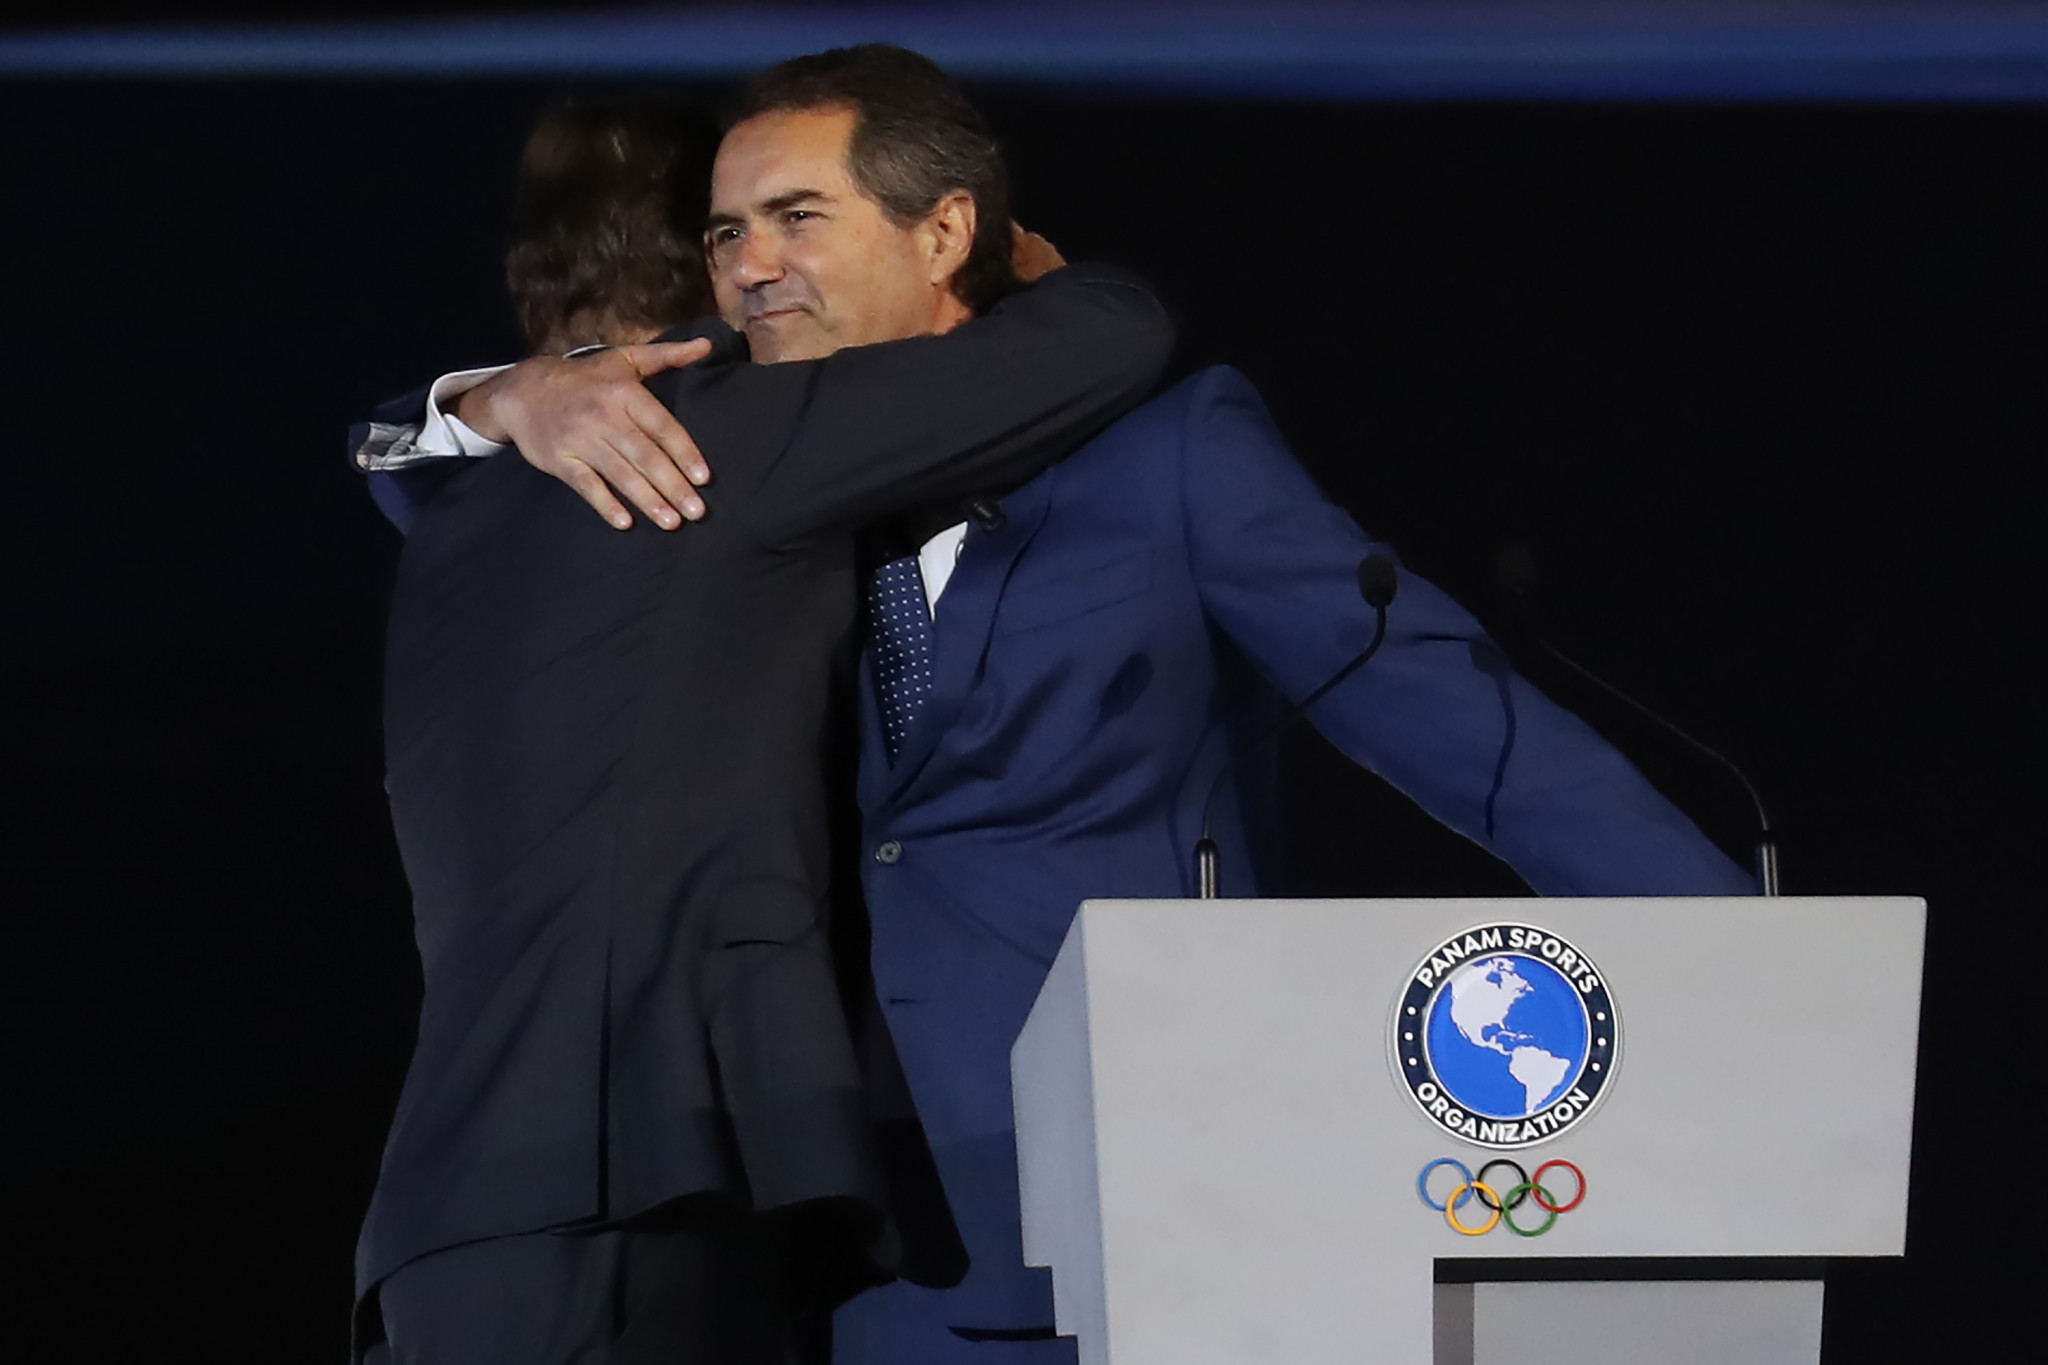 Panam Sports President Neven Ilic congratulated Lima 2019 President Carlos Neuhaus ©Getty Images